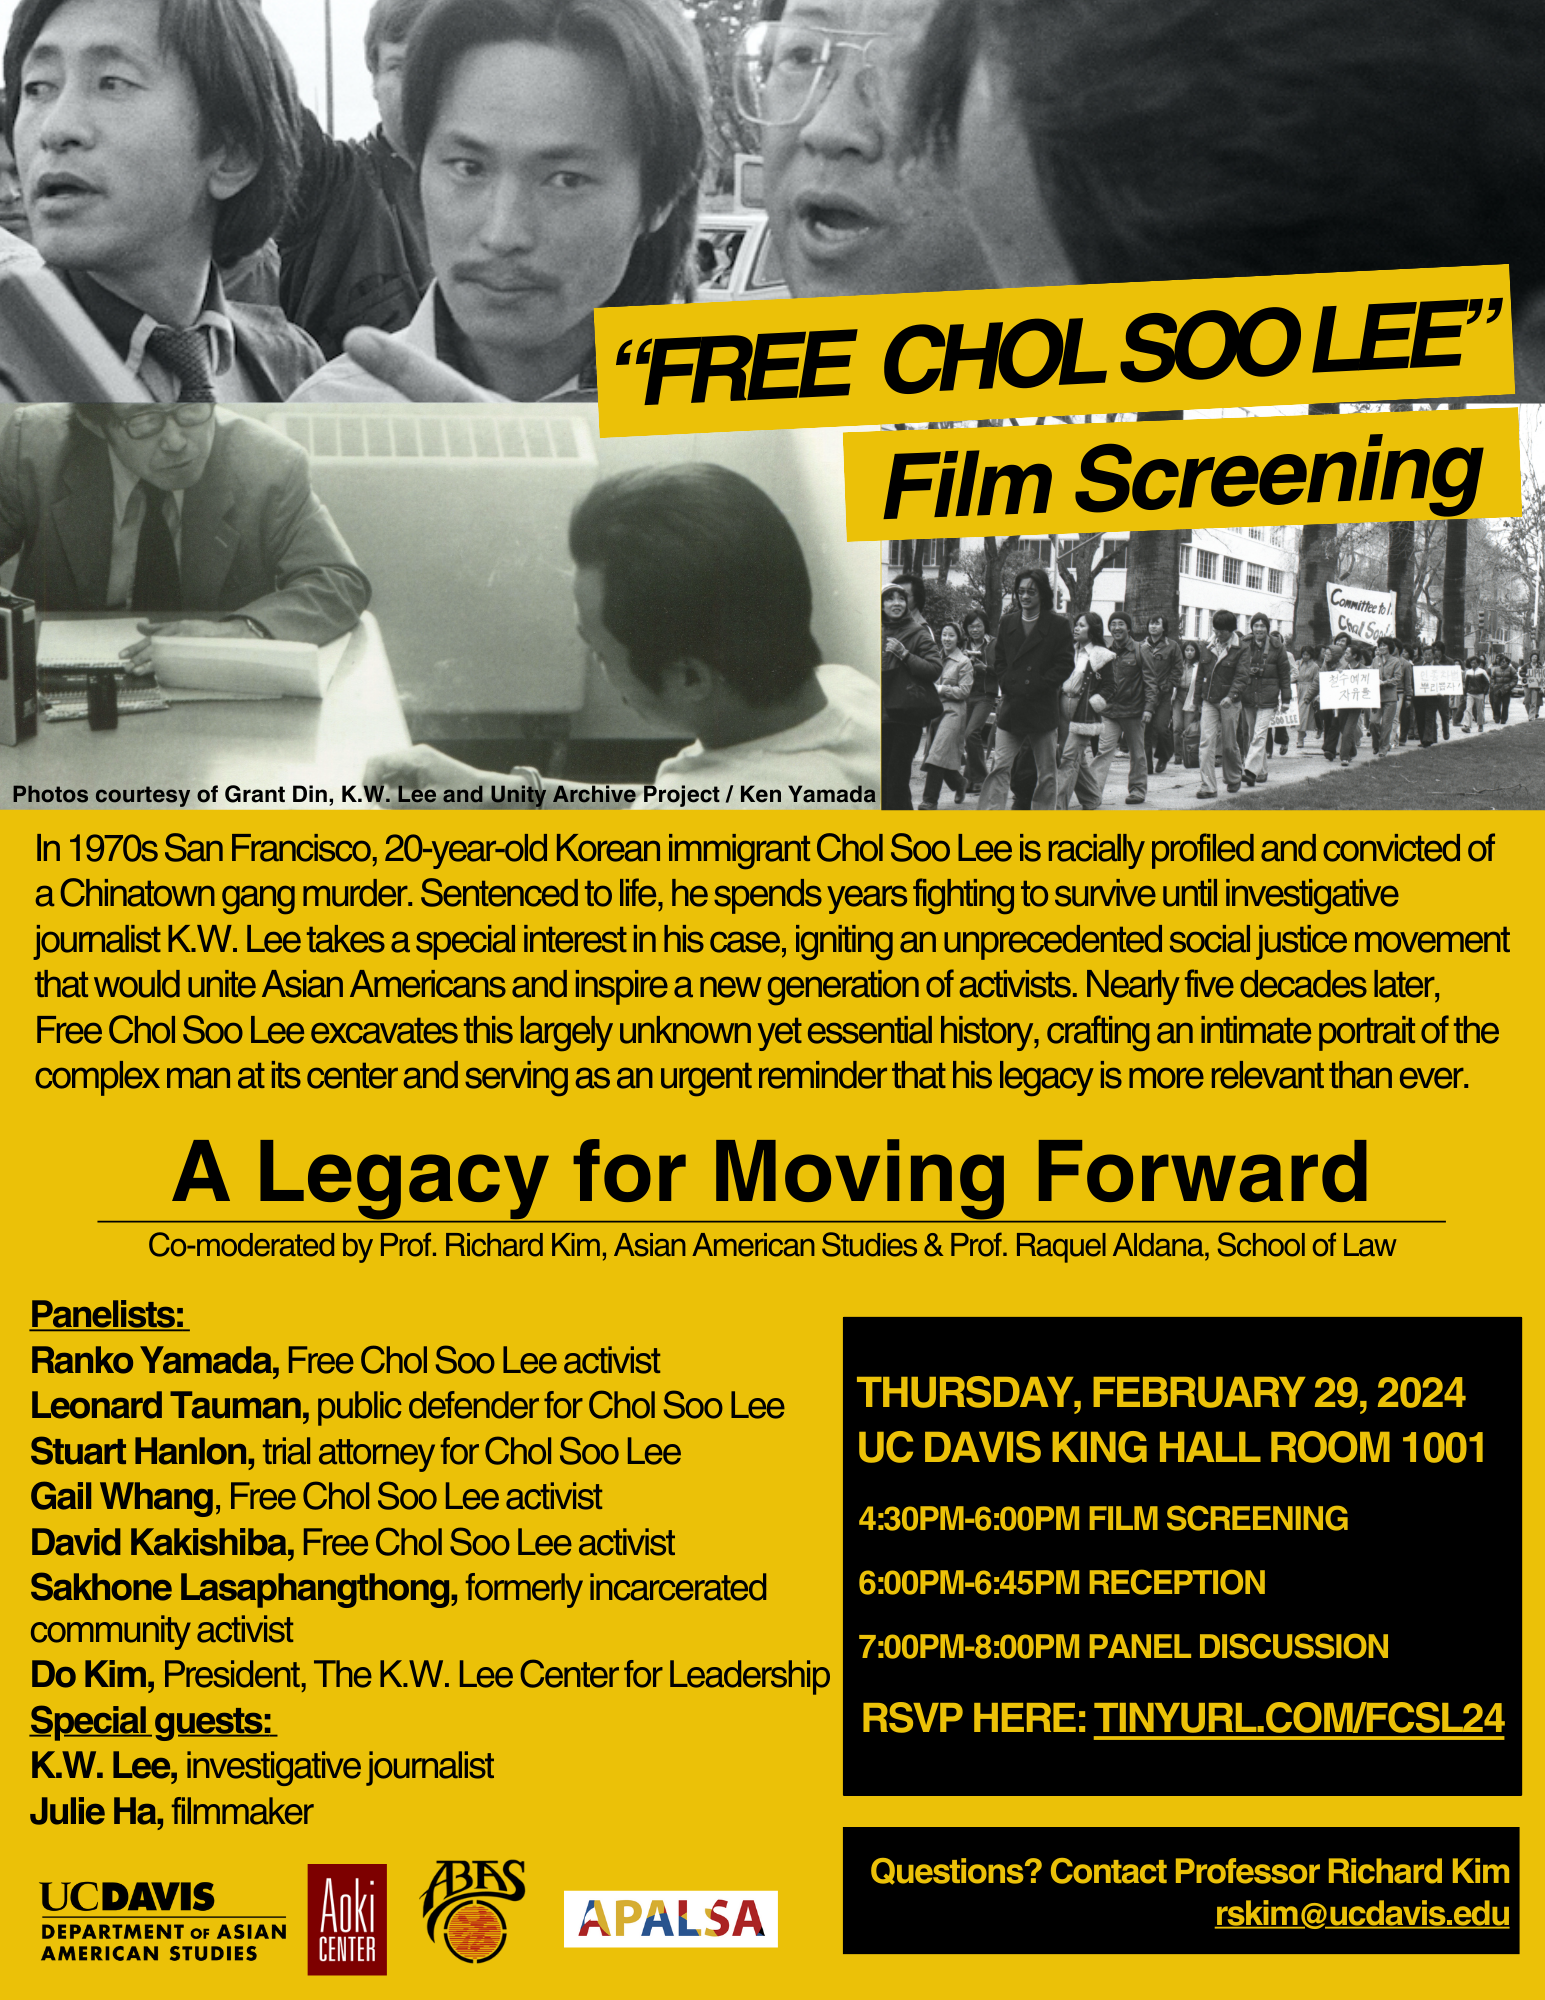 Flyer for "Free Chol Soo Lee" Film Screening